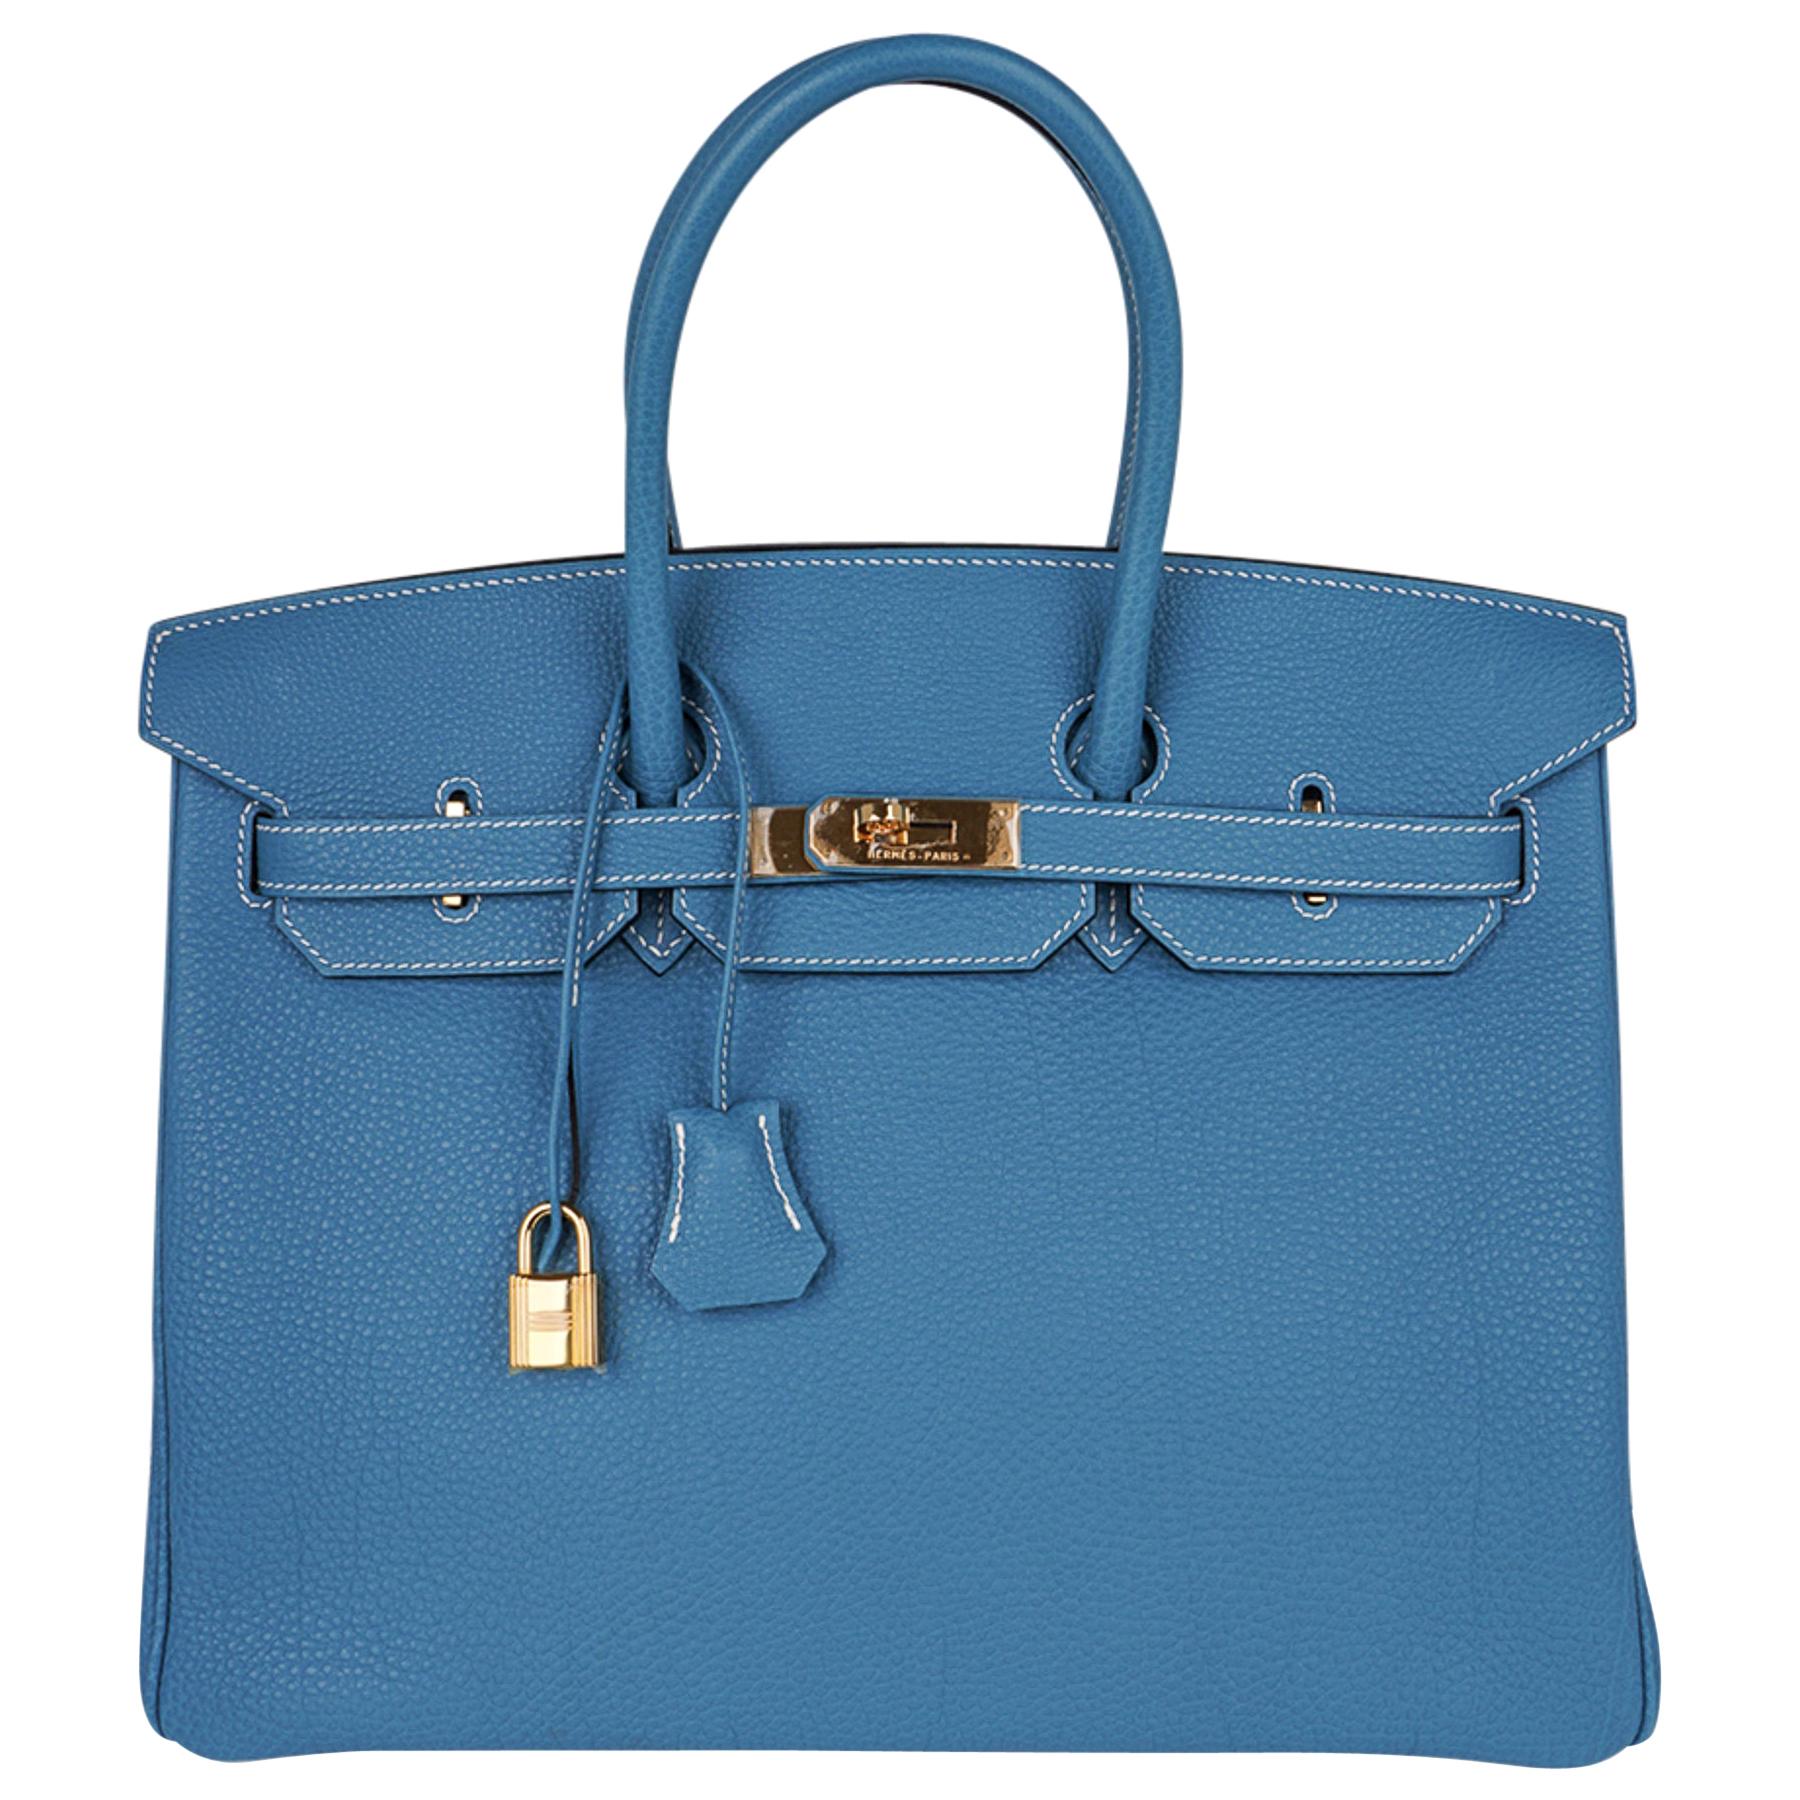 Hermes Birkin 35 Bag Iconic Blue Jean Togo Leather Gold Hardware New Rare